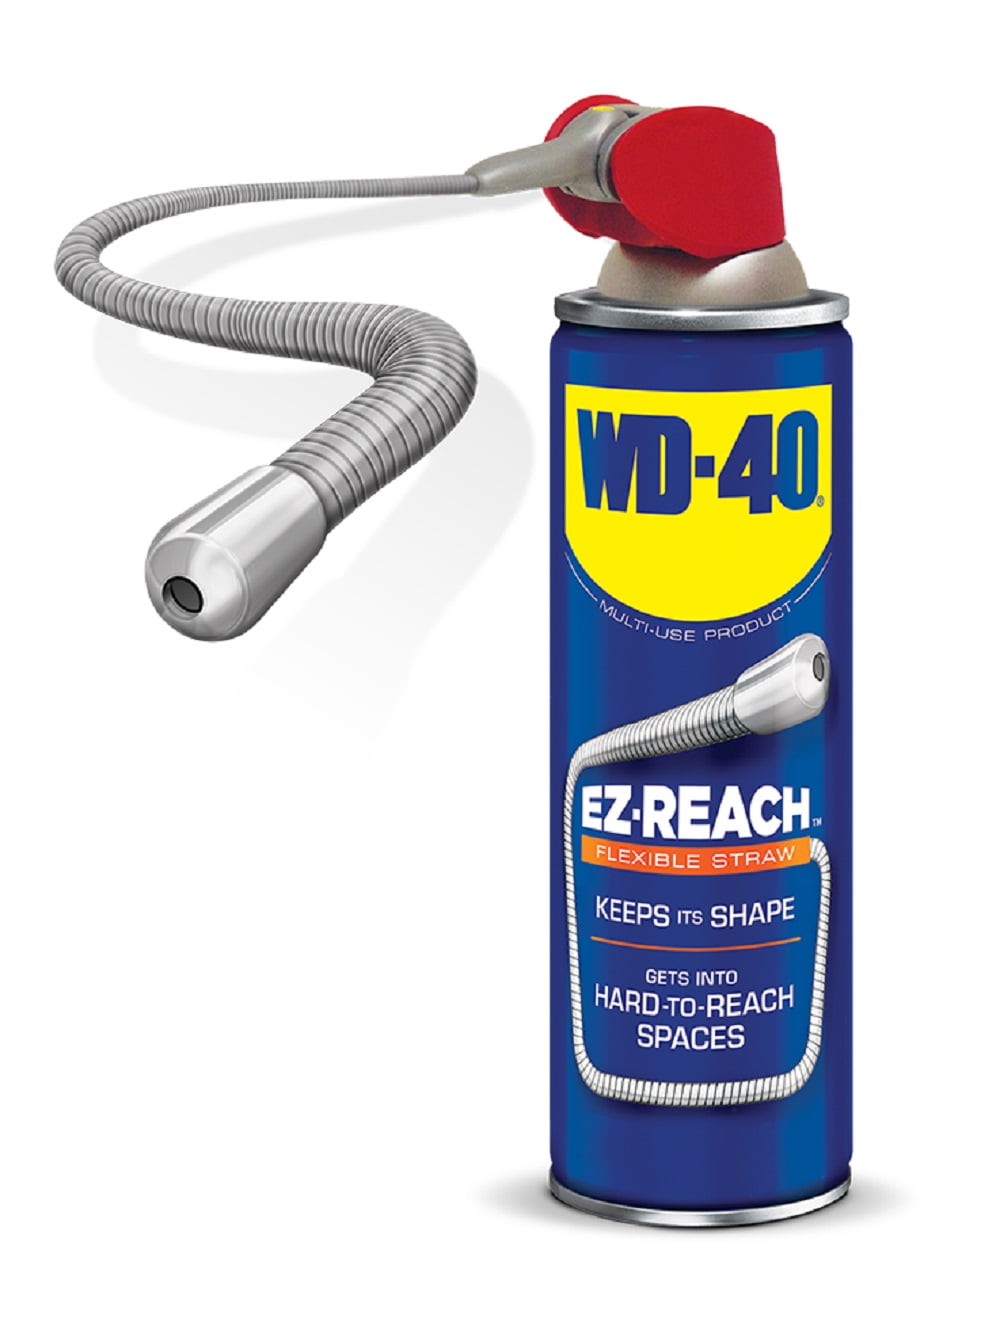 WD-40 EZ-REACH, Original WD-40 Formula, Multi-Purpose Lubricant Spray with 8 in. Flexible Straw, 14.4 oz.